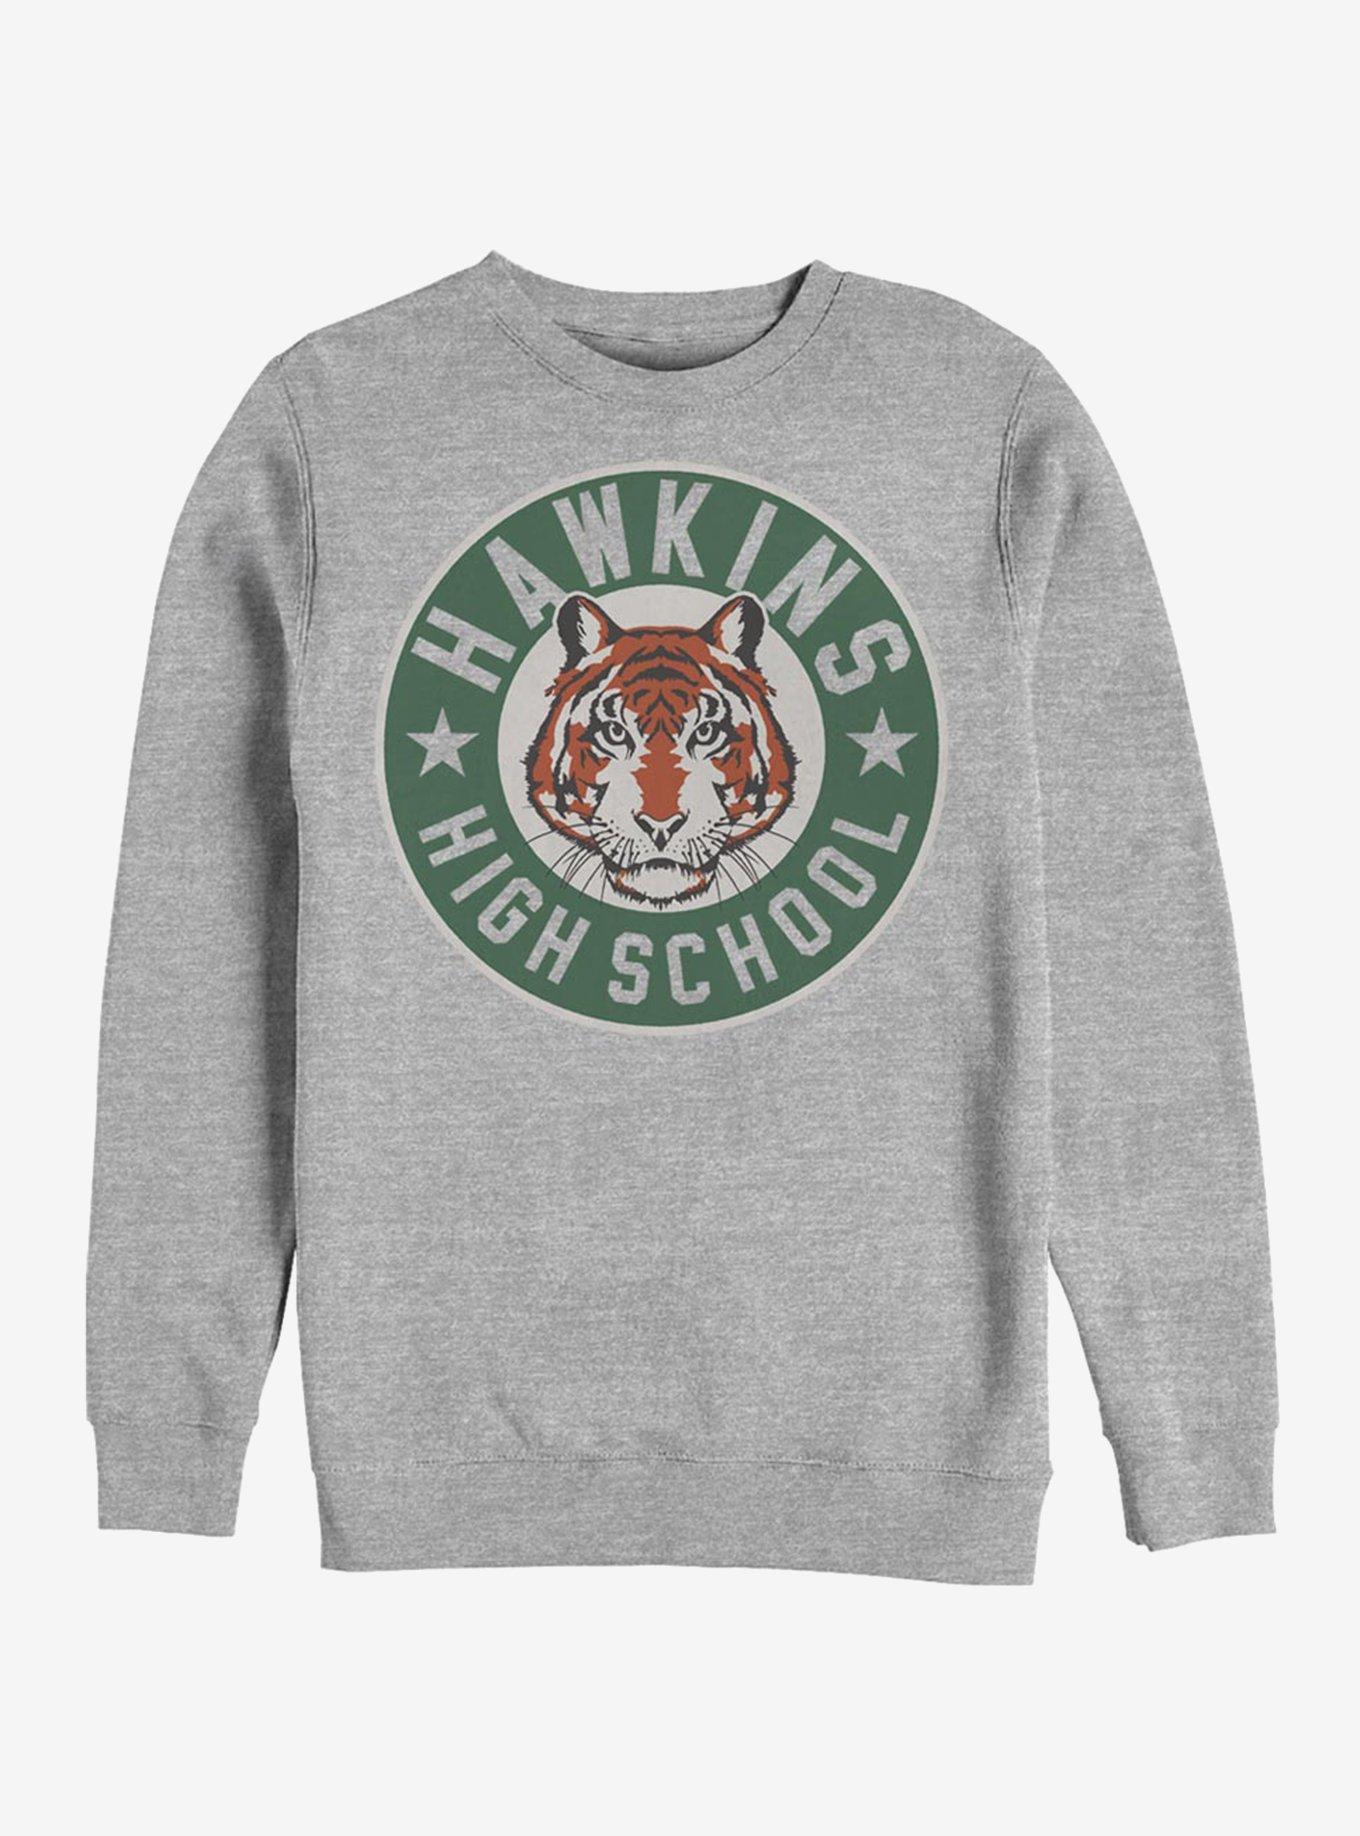 Cheap Hawkins High School Logo Stranger Things Sweatshirt, Cool